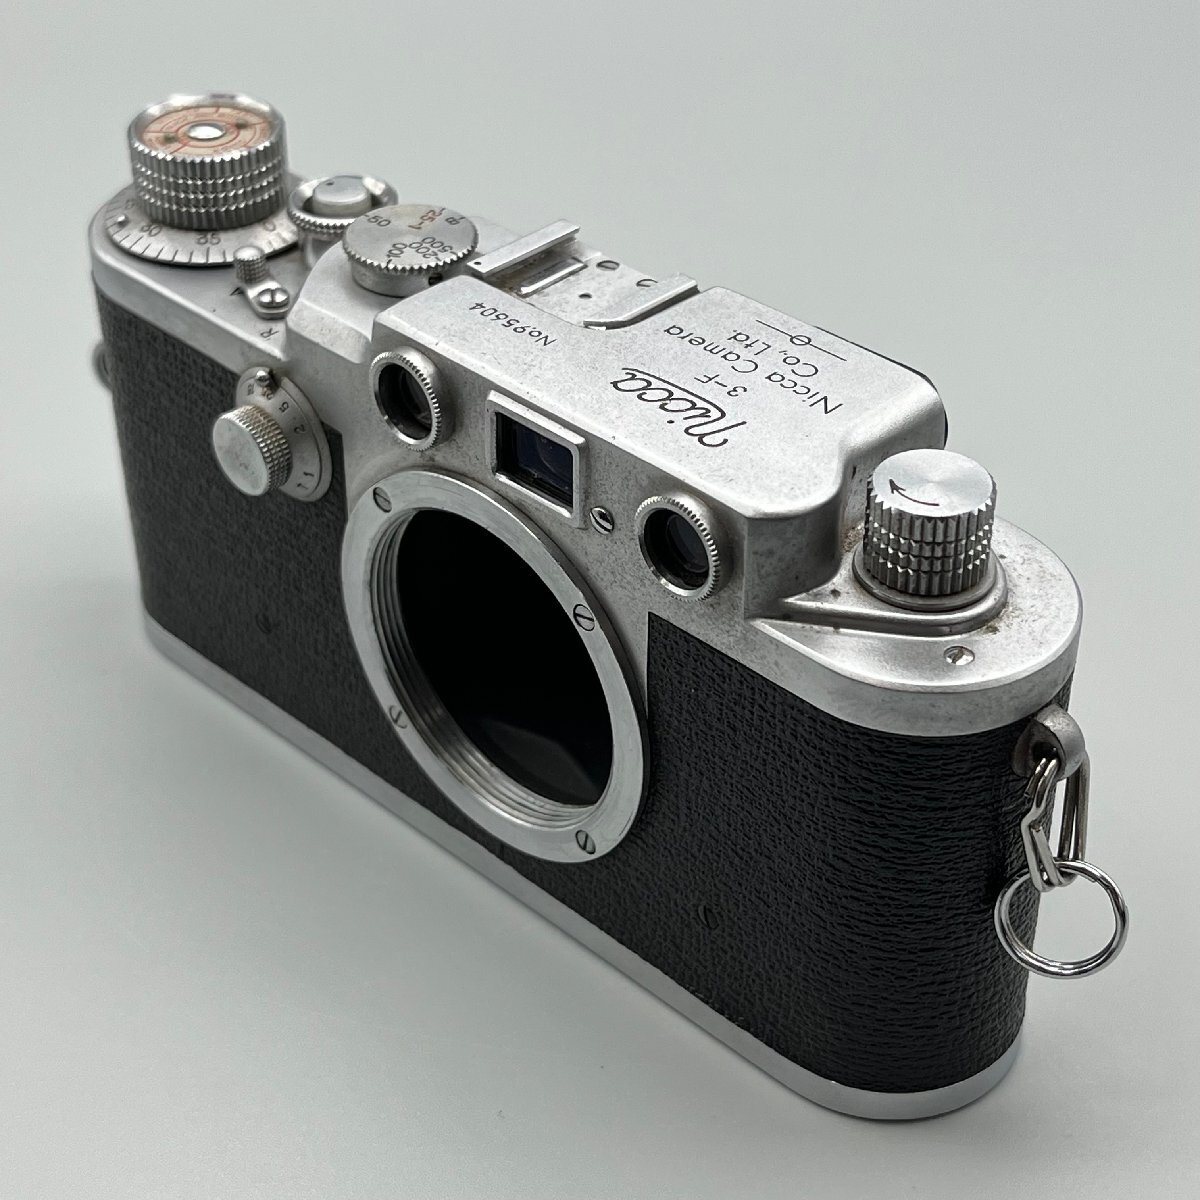 Nicca 3-F ニッカ ⅢF型 Nicca Camera Co., Ltd. ニッカカメラ Leica ライカ Lマウント ジャンク品の画像2